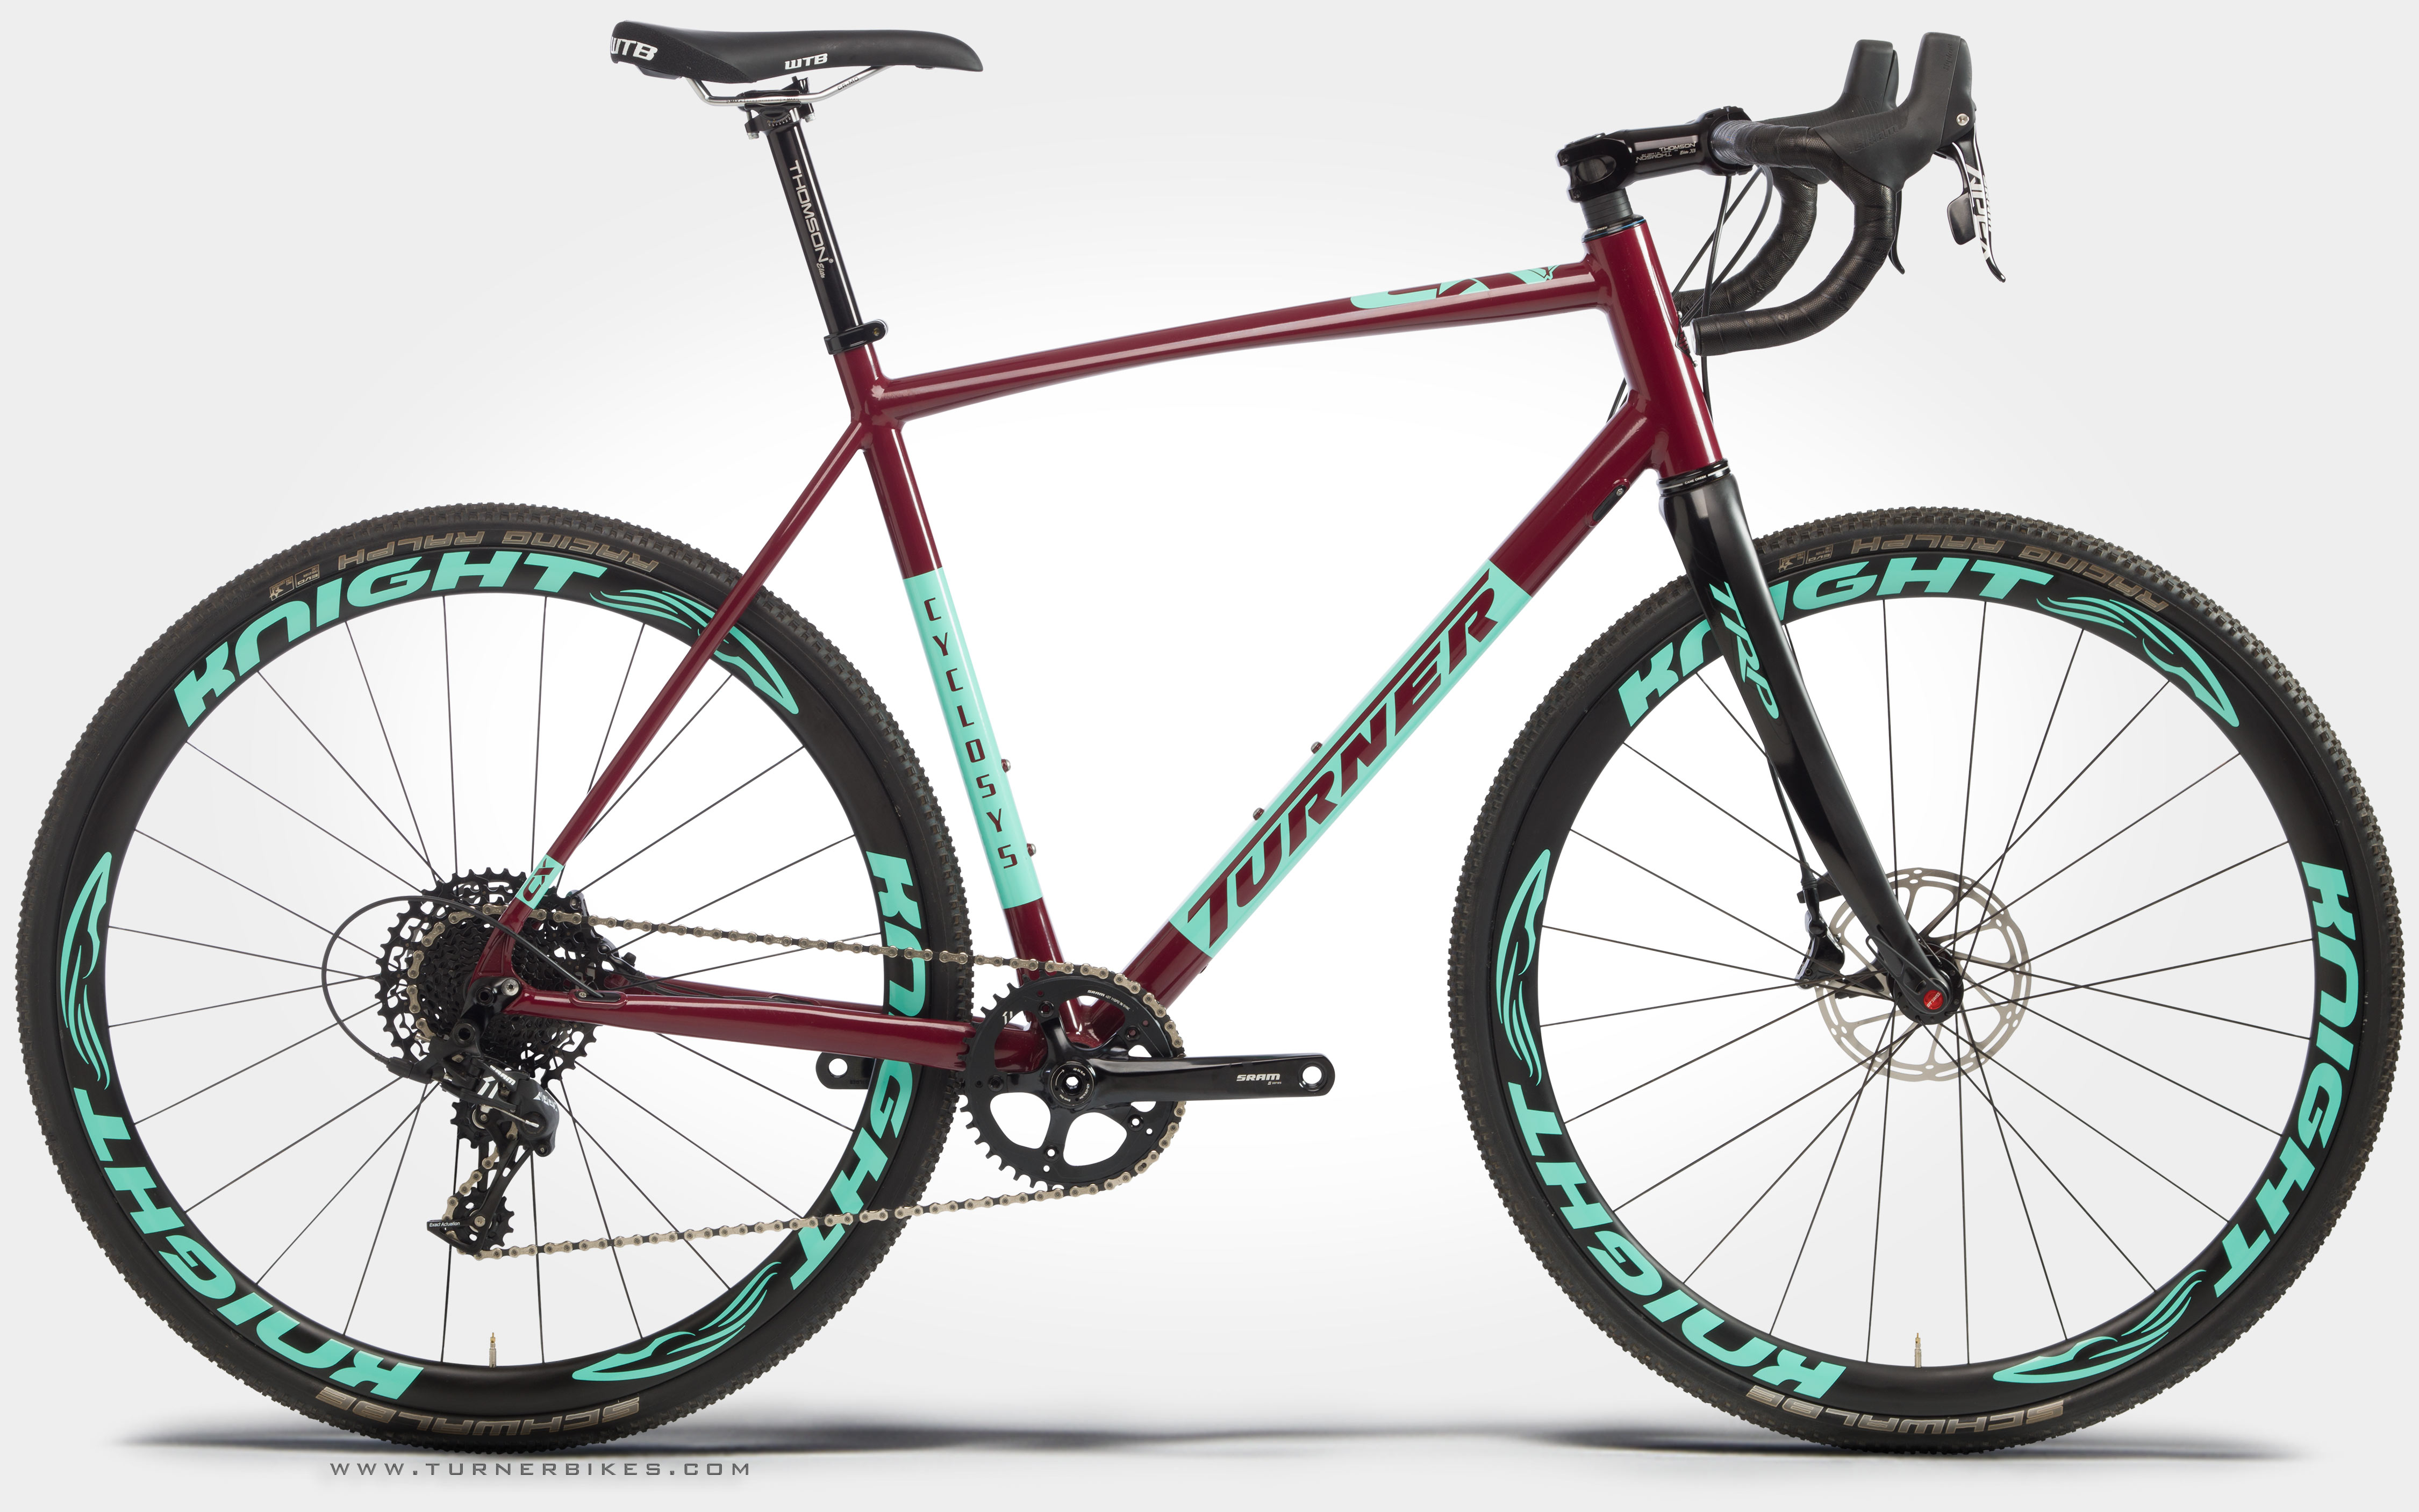 Cyclosys 1.0 | Cyclocross Bike | Turner Bikes